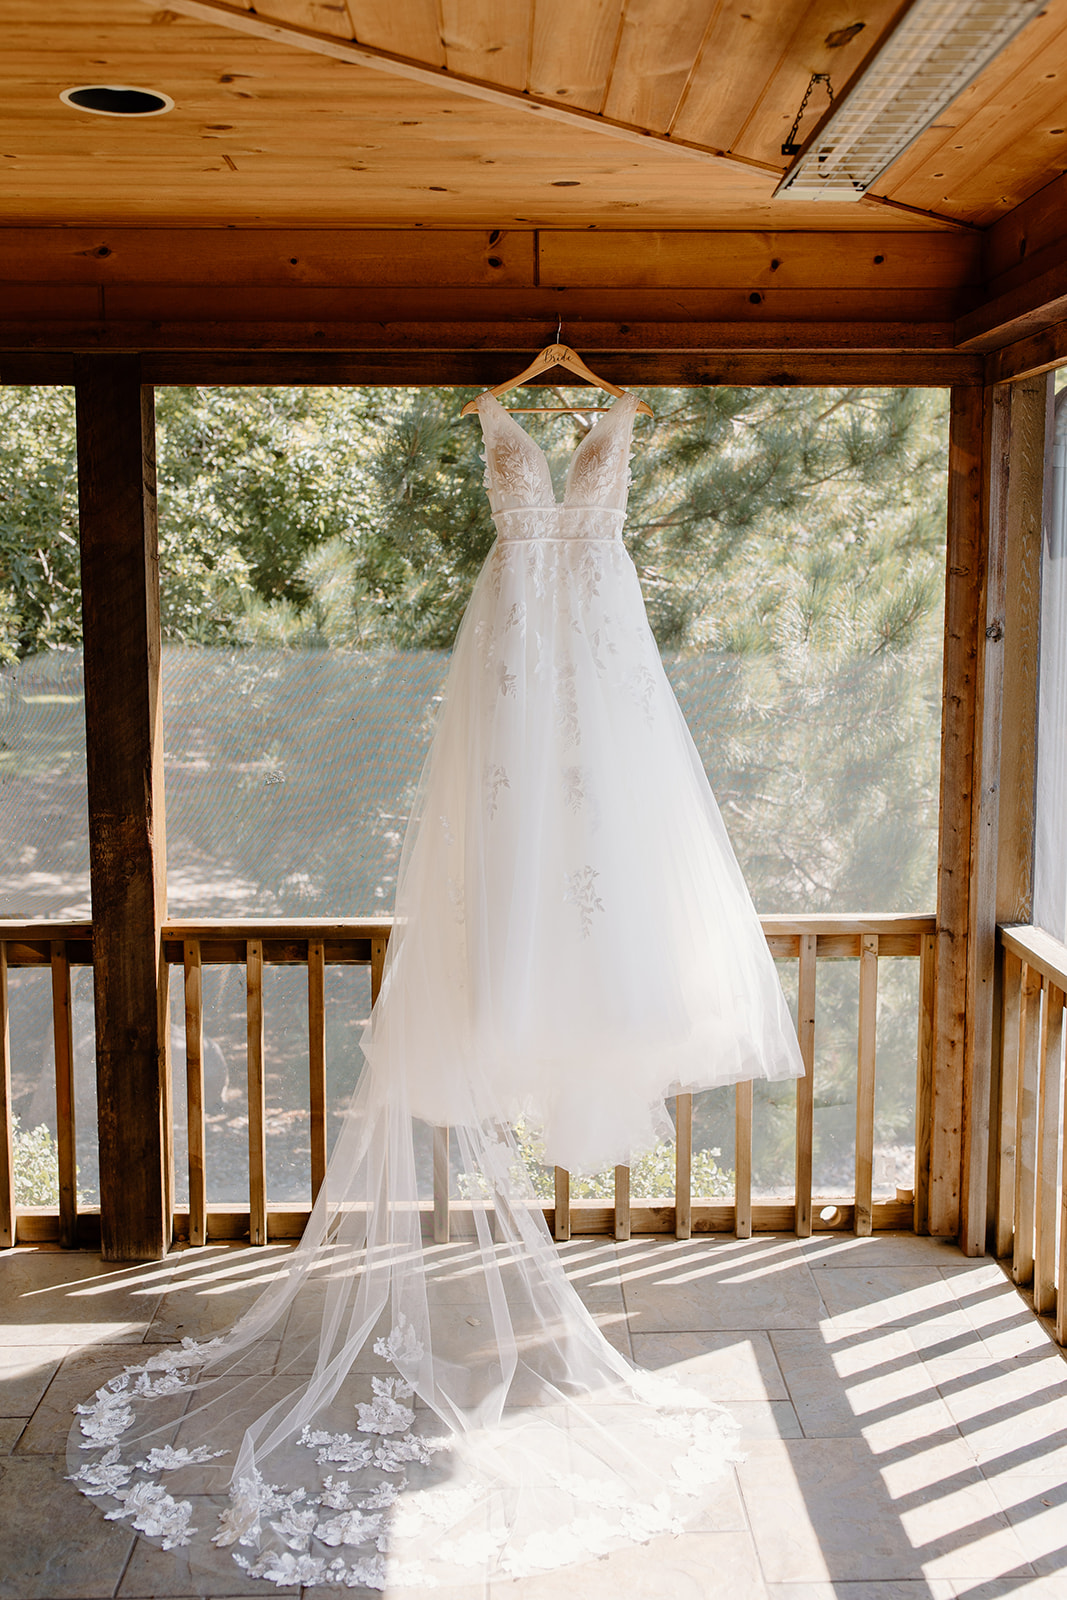 Wedding dress hanging up inside a porch